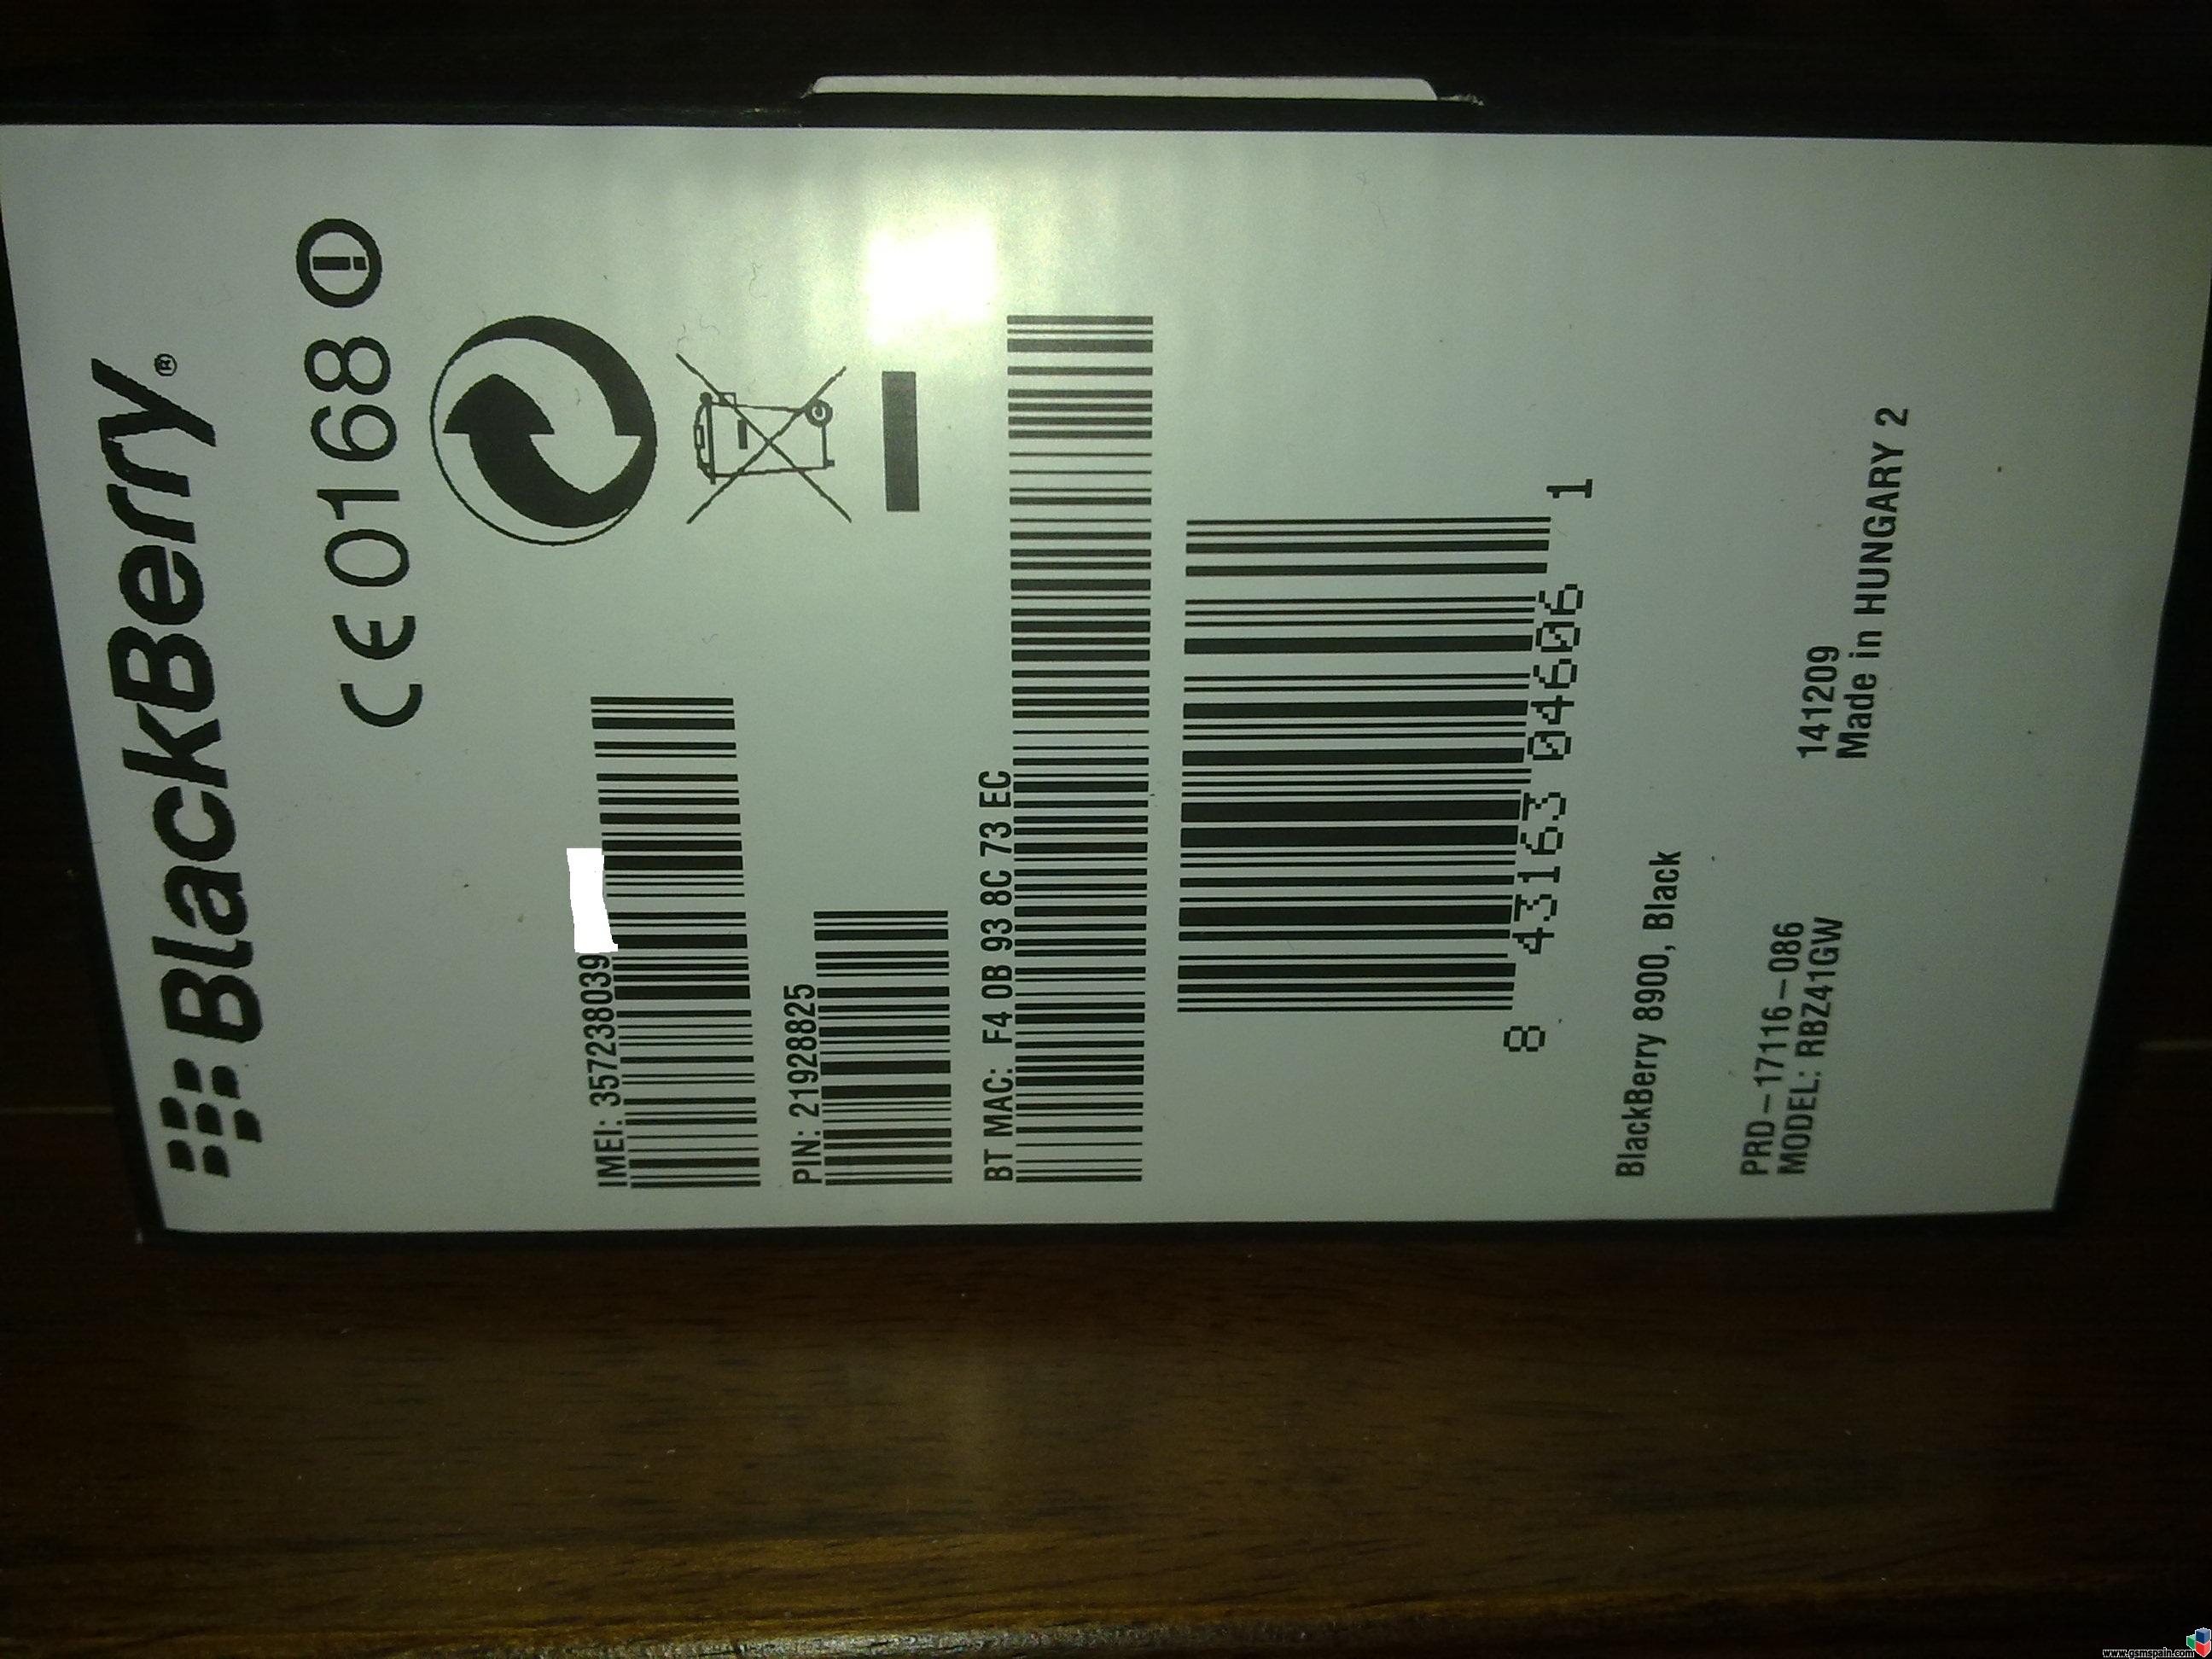 Vendo Blackberry 8900 Javelin Vodafone, caja precintada